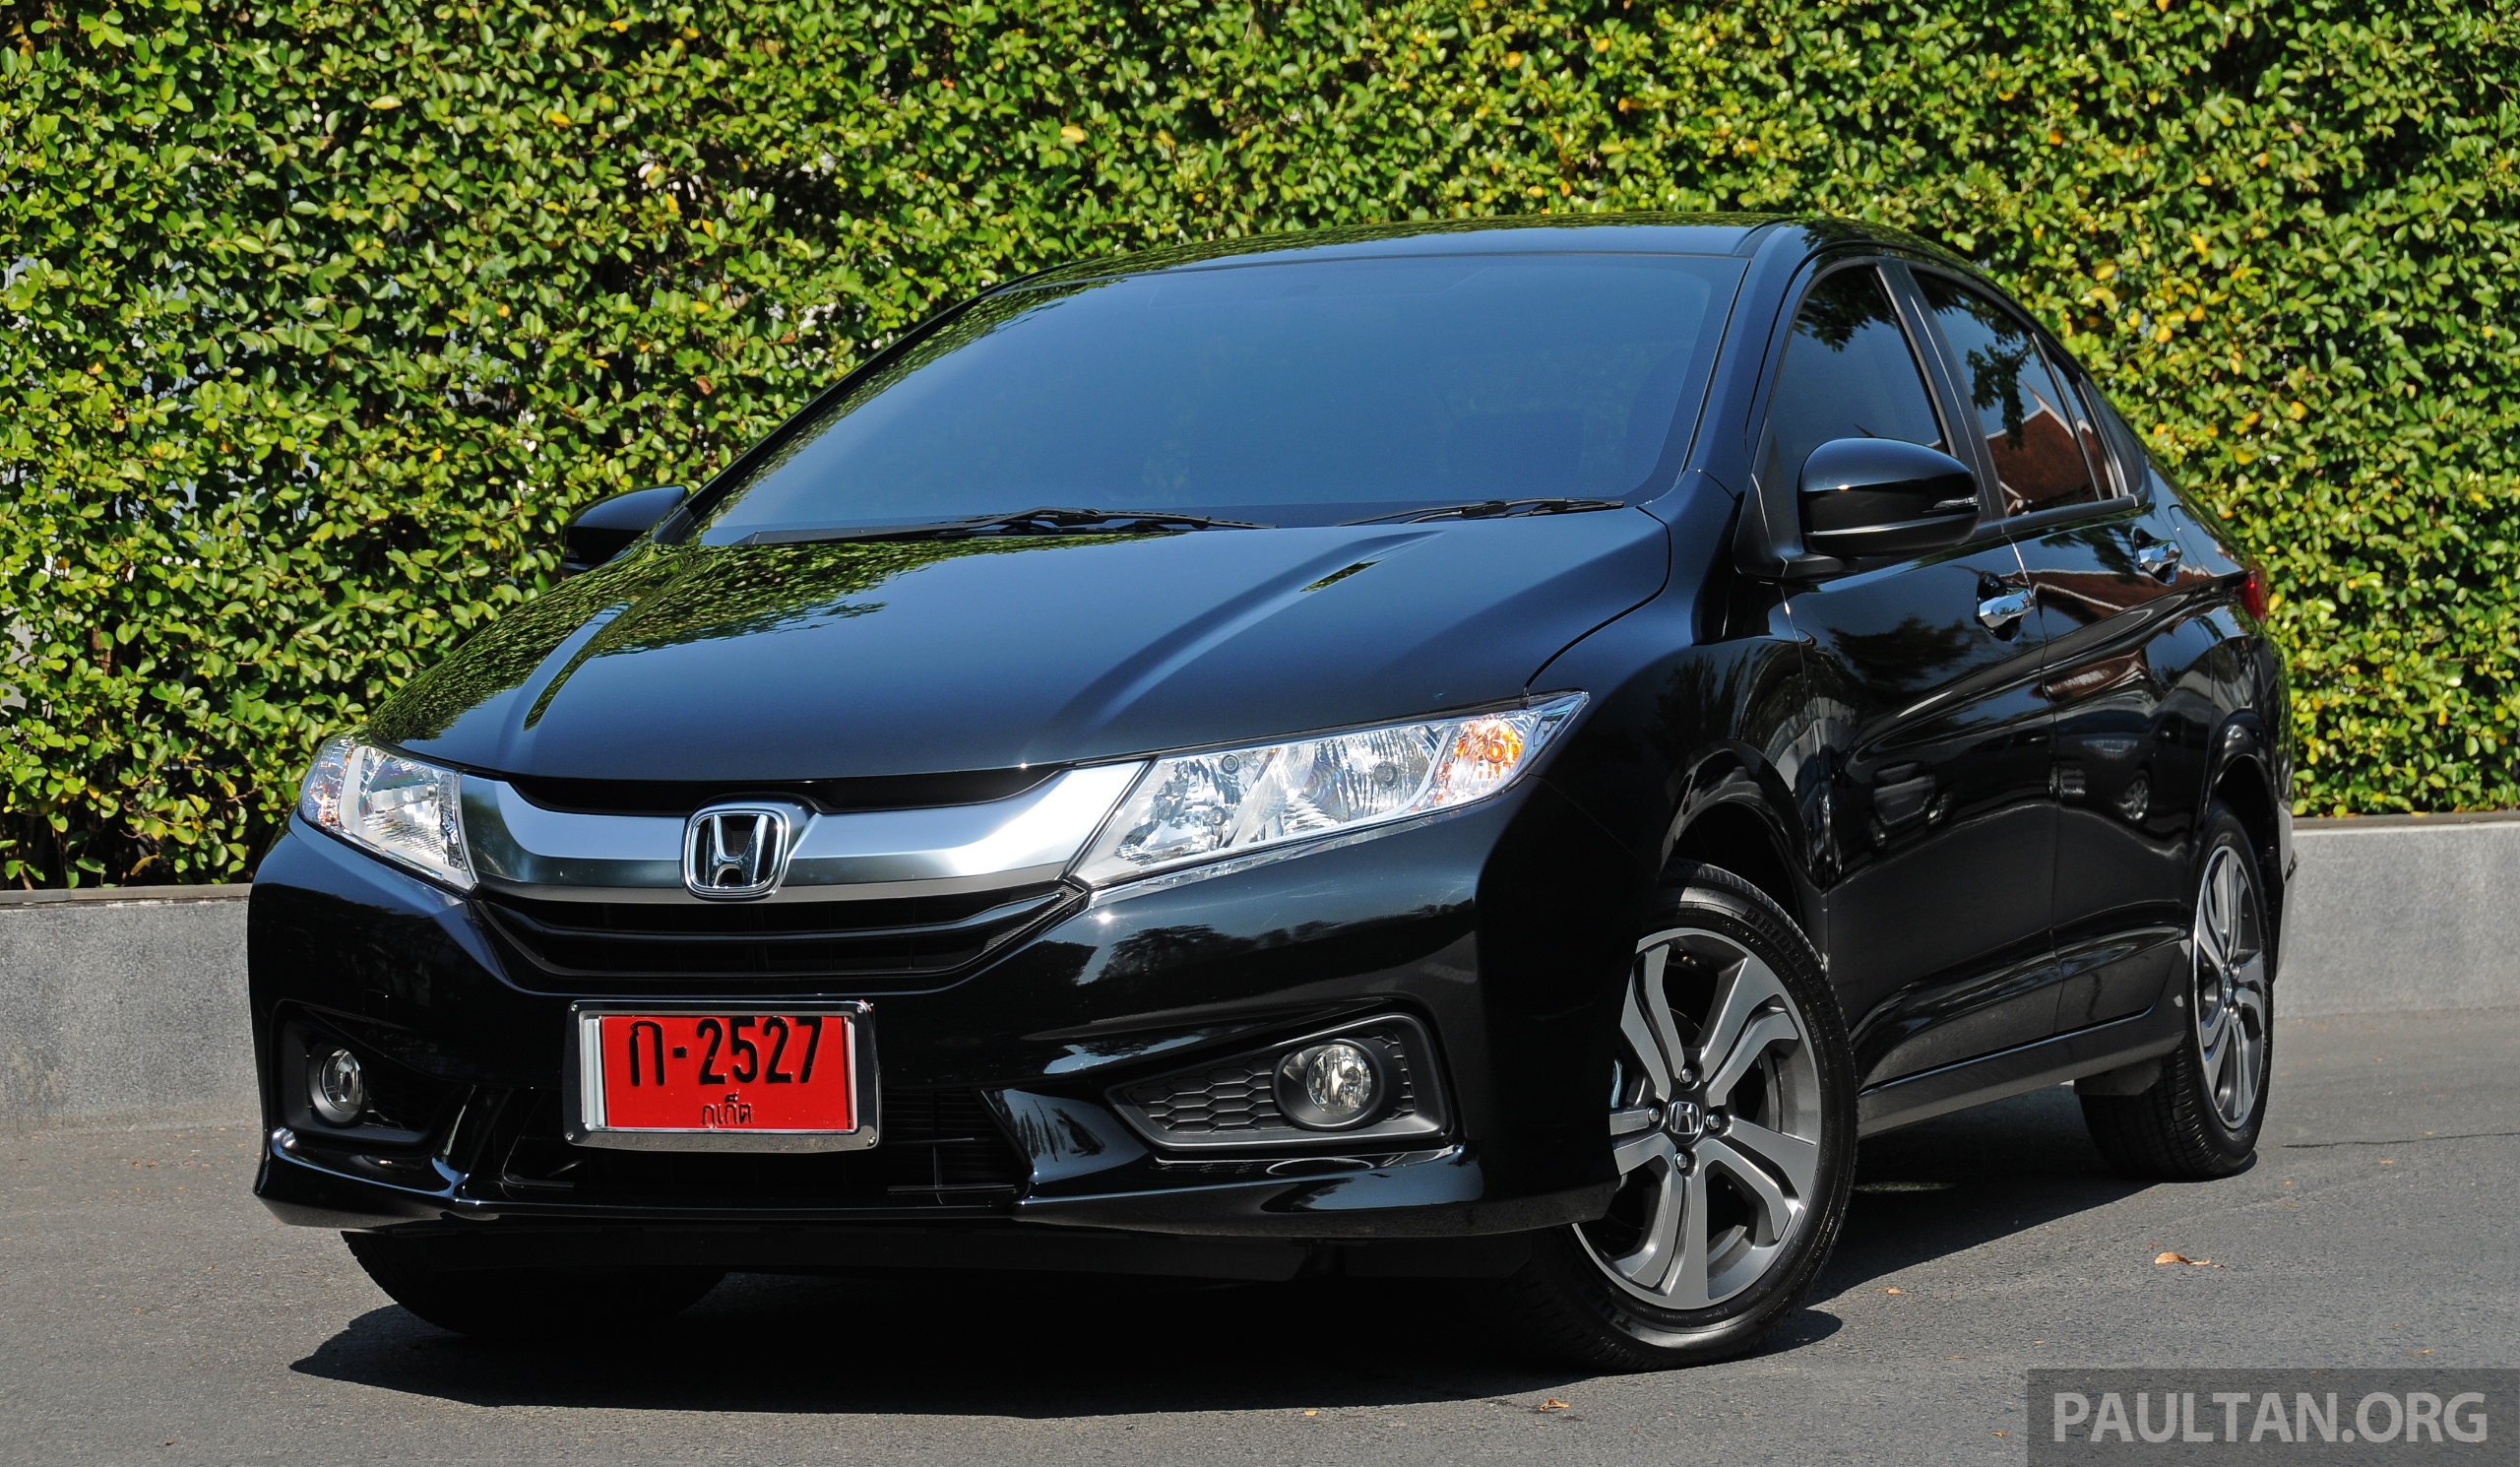 DRIVEN: 2014 Honda City i-VTEC previewed in Phuket Paul Tan - Image 232888